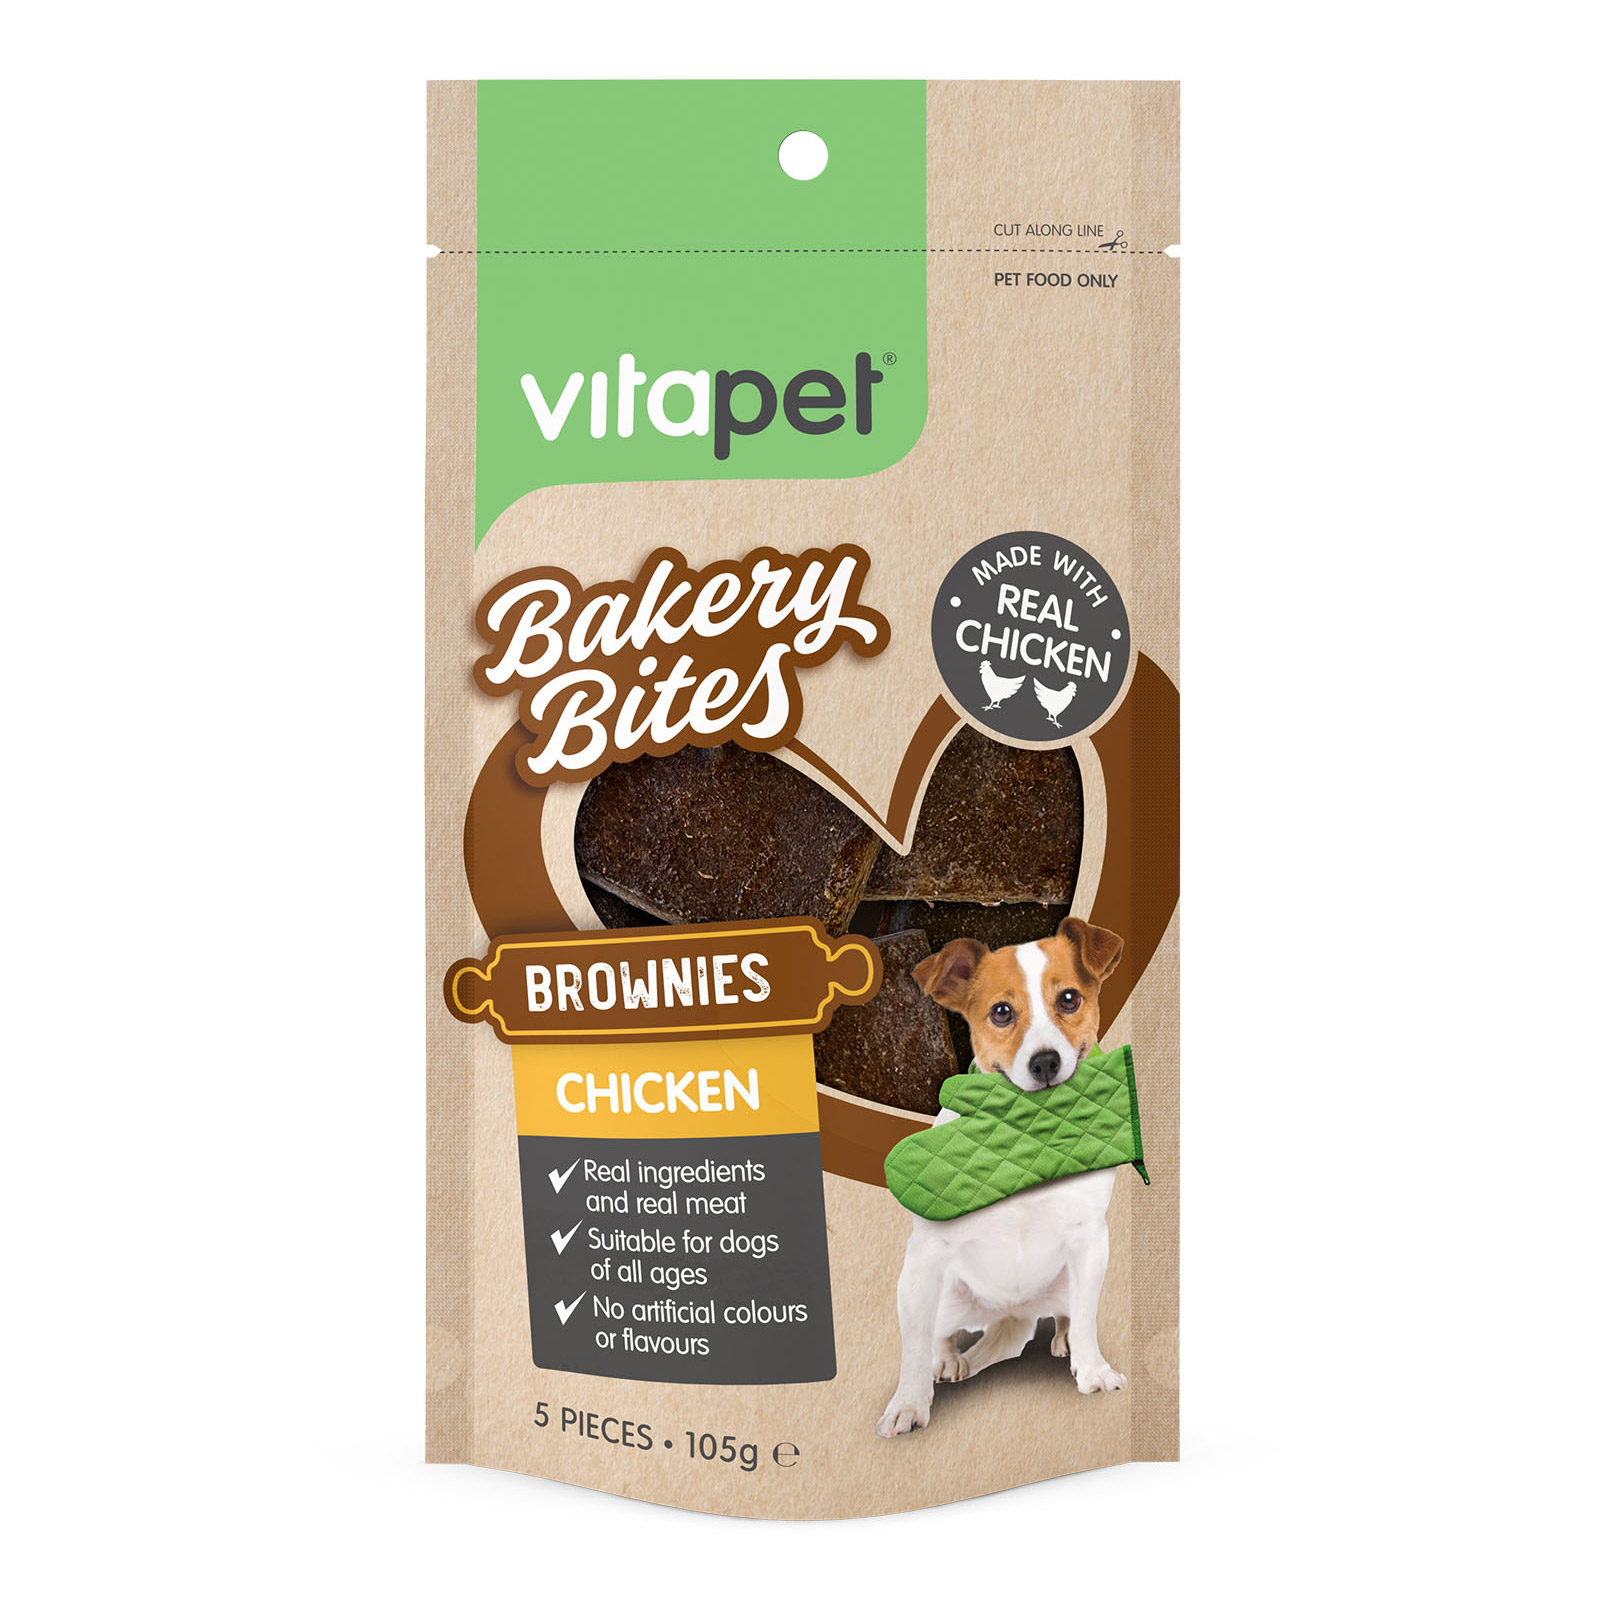 VitaPet Bakery Bites Chicken Brownies Treats for Dogs